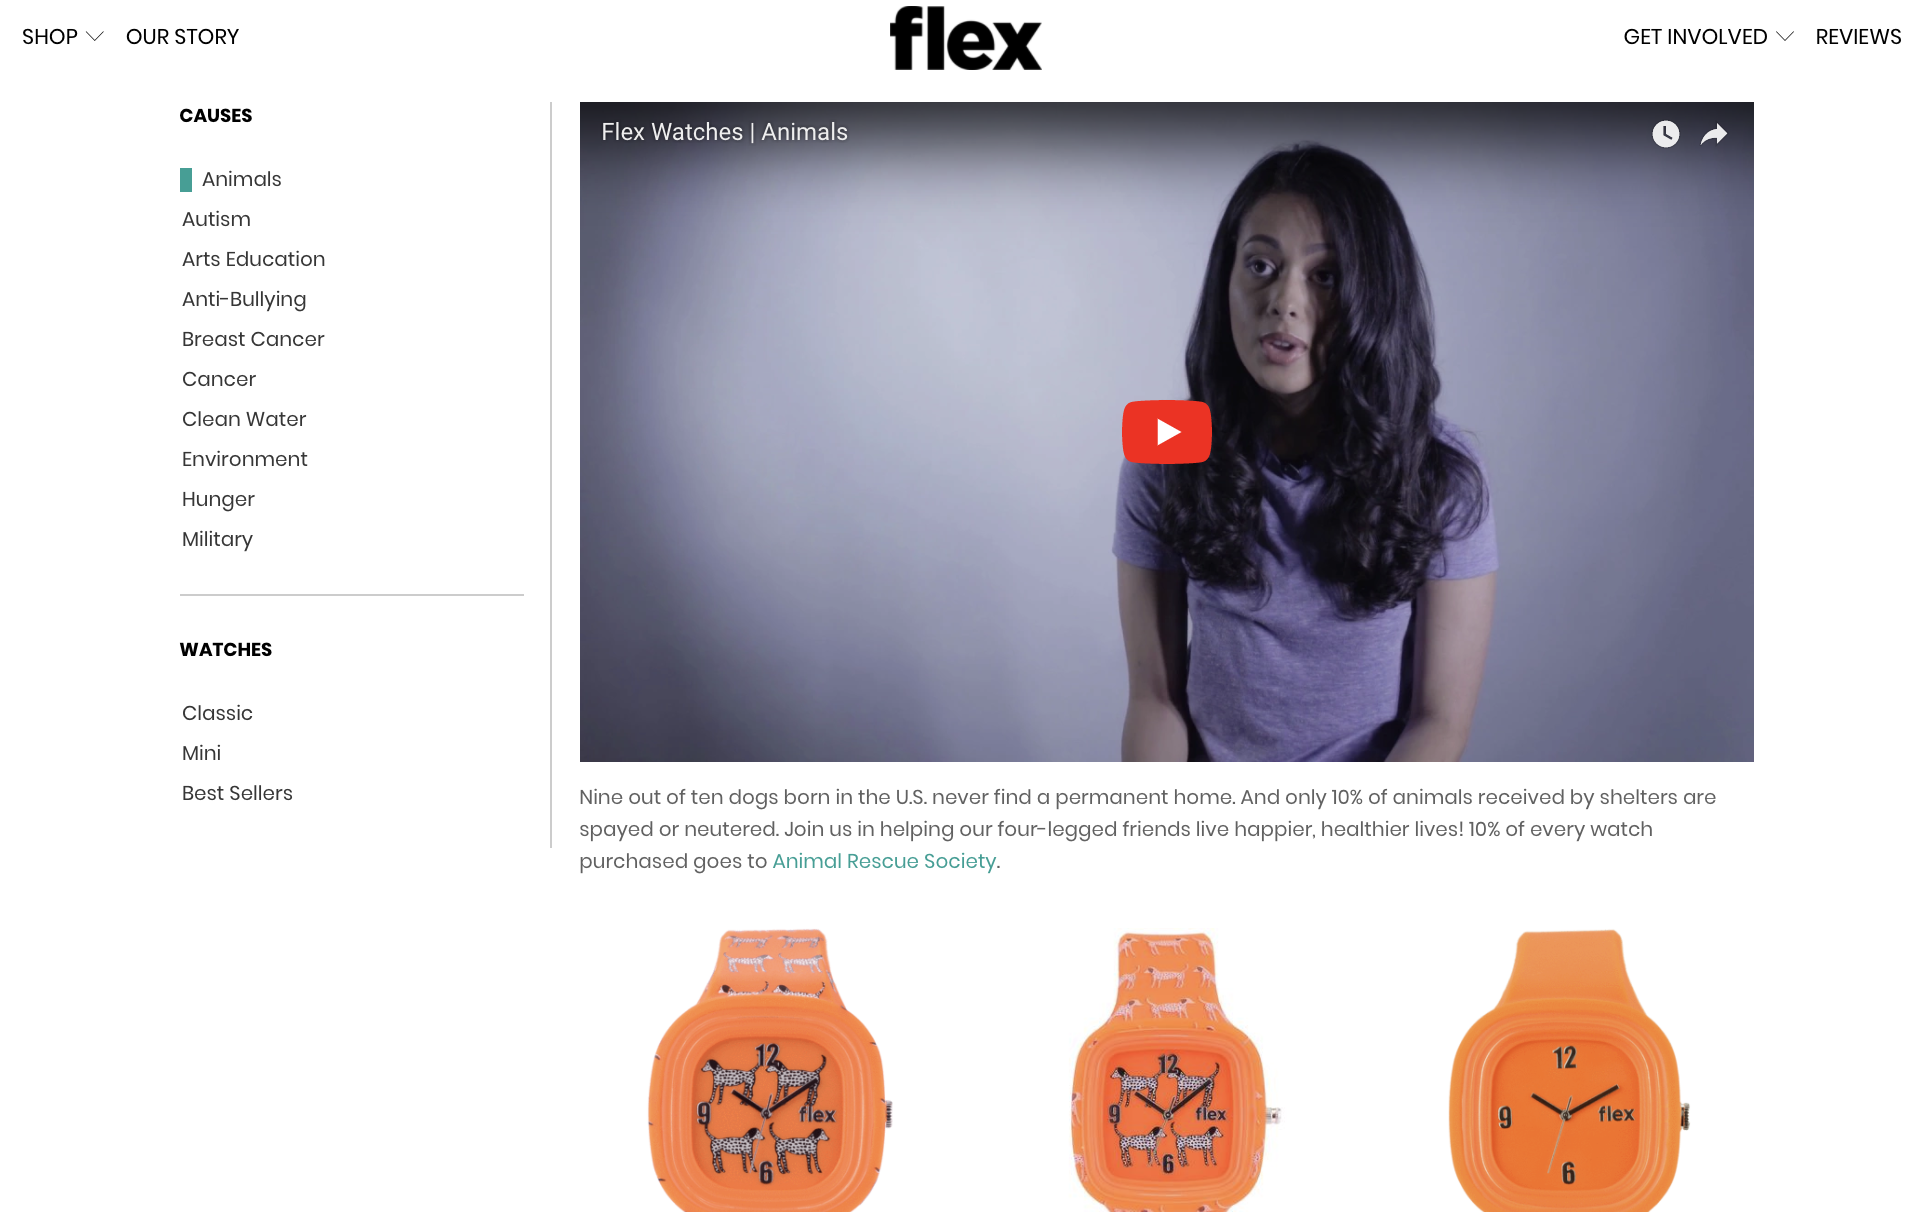 Flex Watches persuasion